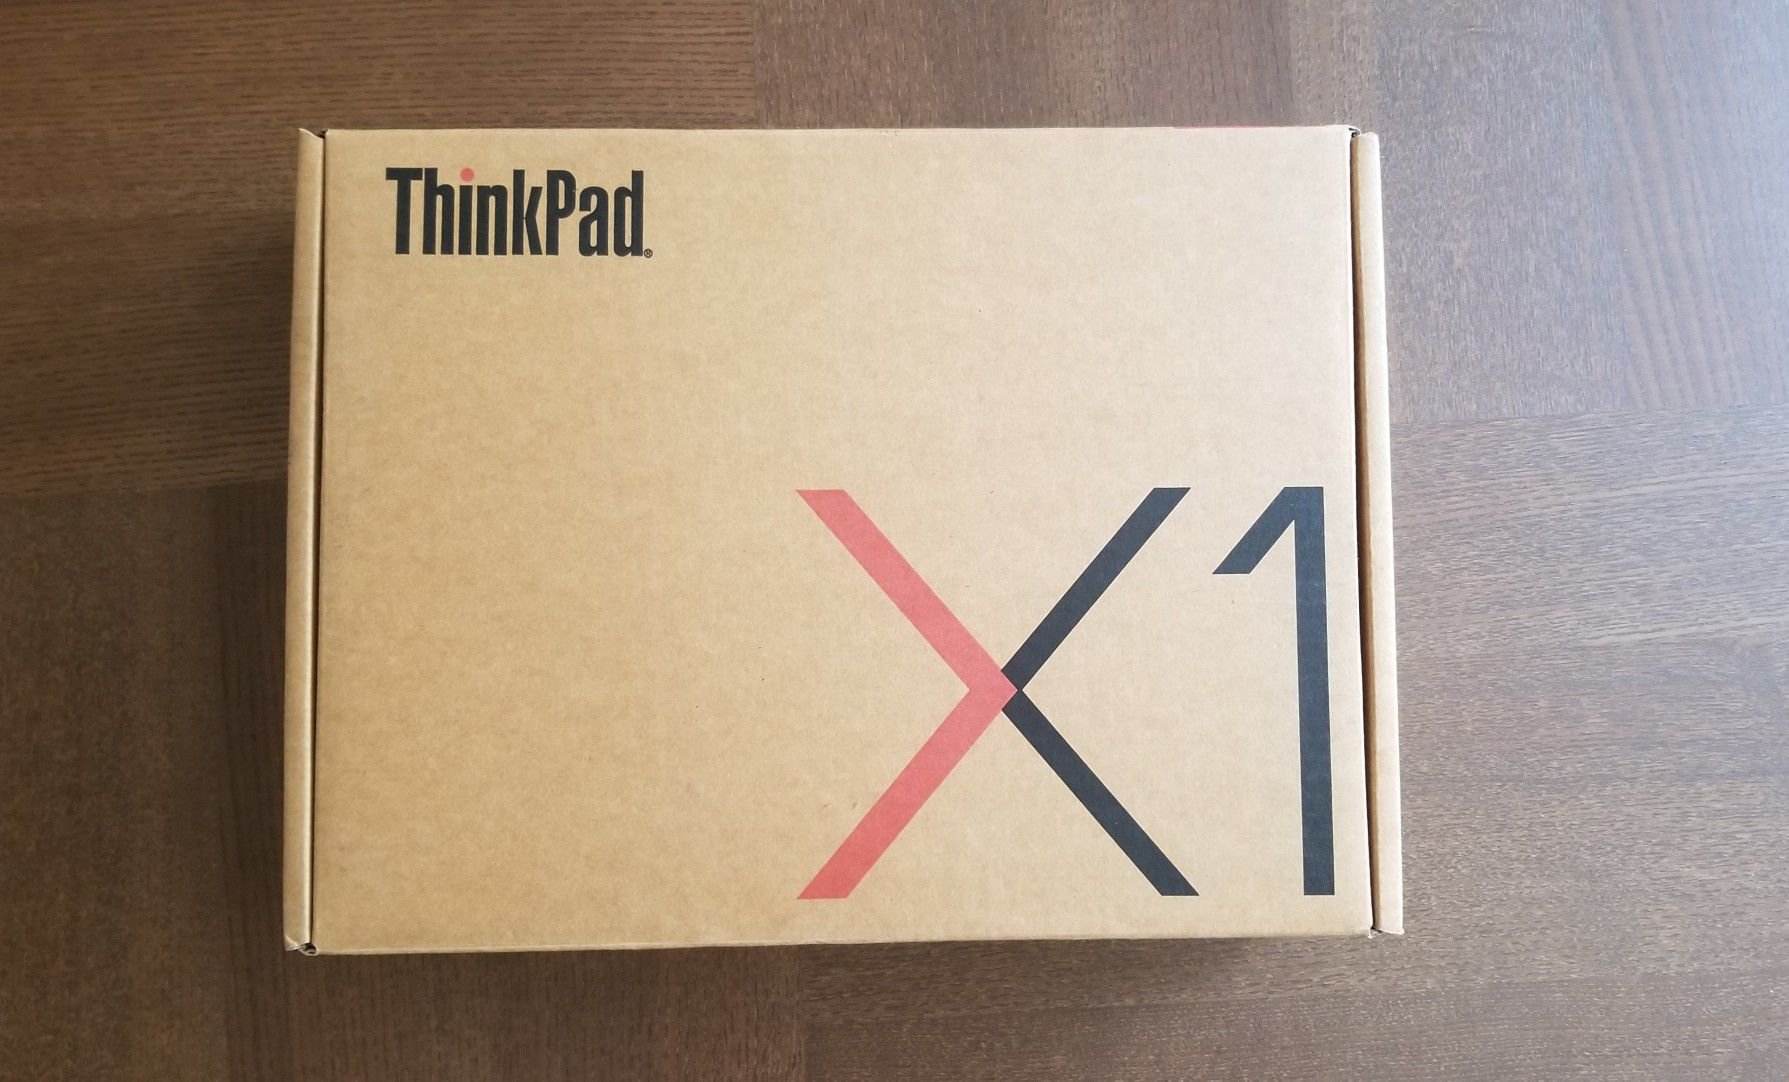 Lenovo Thinkpad X1 windows 10 laptop/tablet